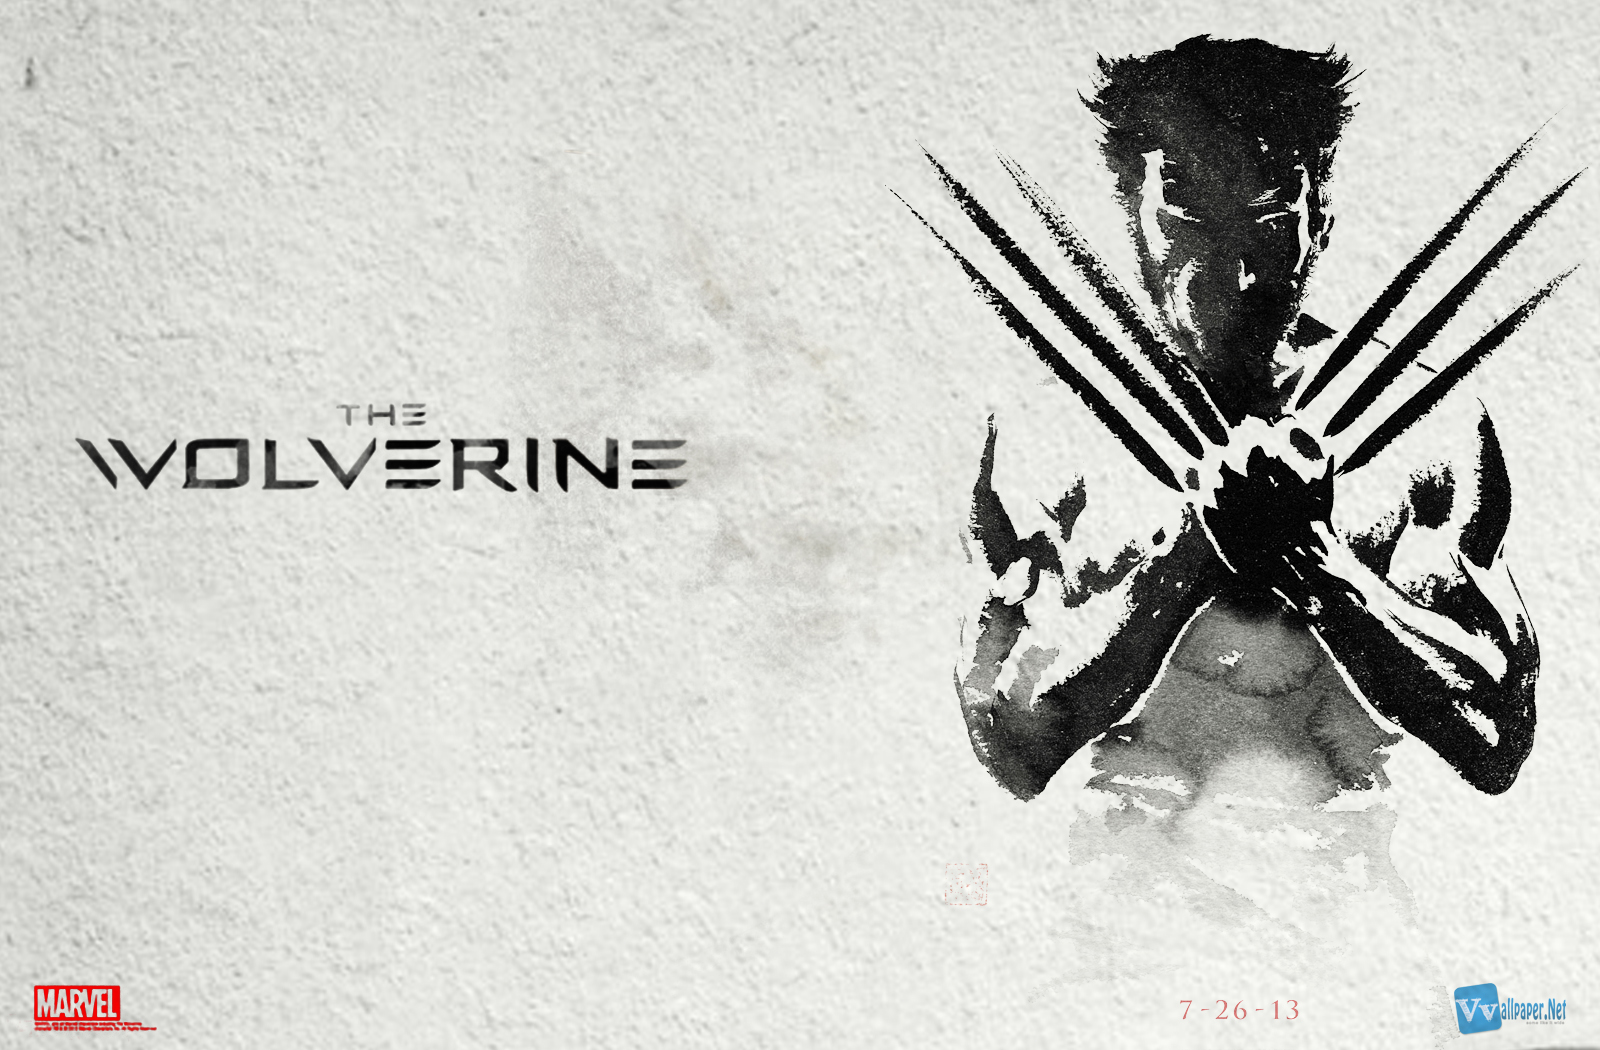 http://3.bp.blogspot.com/-nt4_rCBrmBA/UJjAY_D0KCI/AAAAAAAAF3E/seYxgfNH-fg/s1600/Marvel-The-Wolverine-Movie-2013-HD-Wallpaper_Vvallpaper.Net.jpg